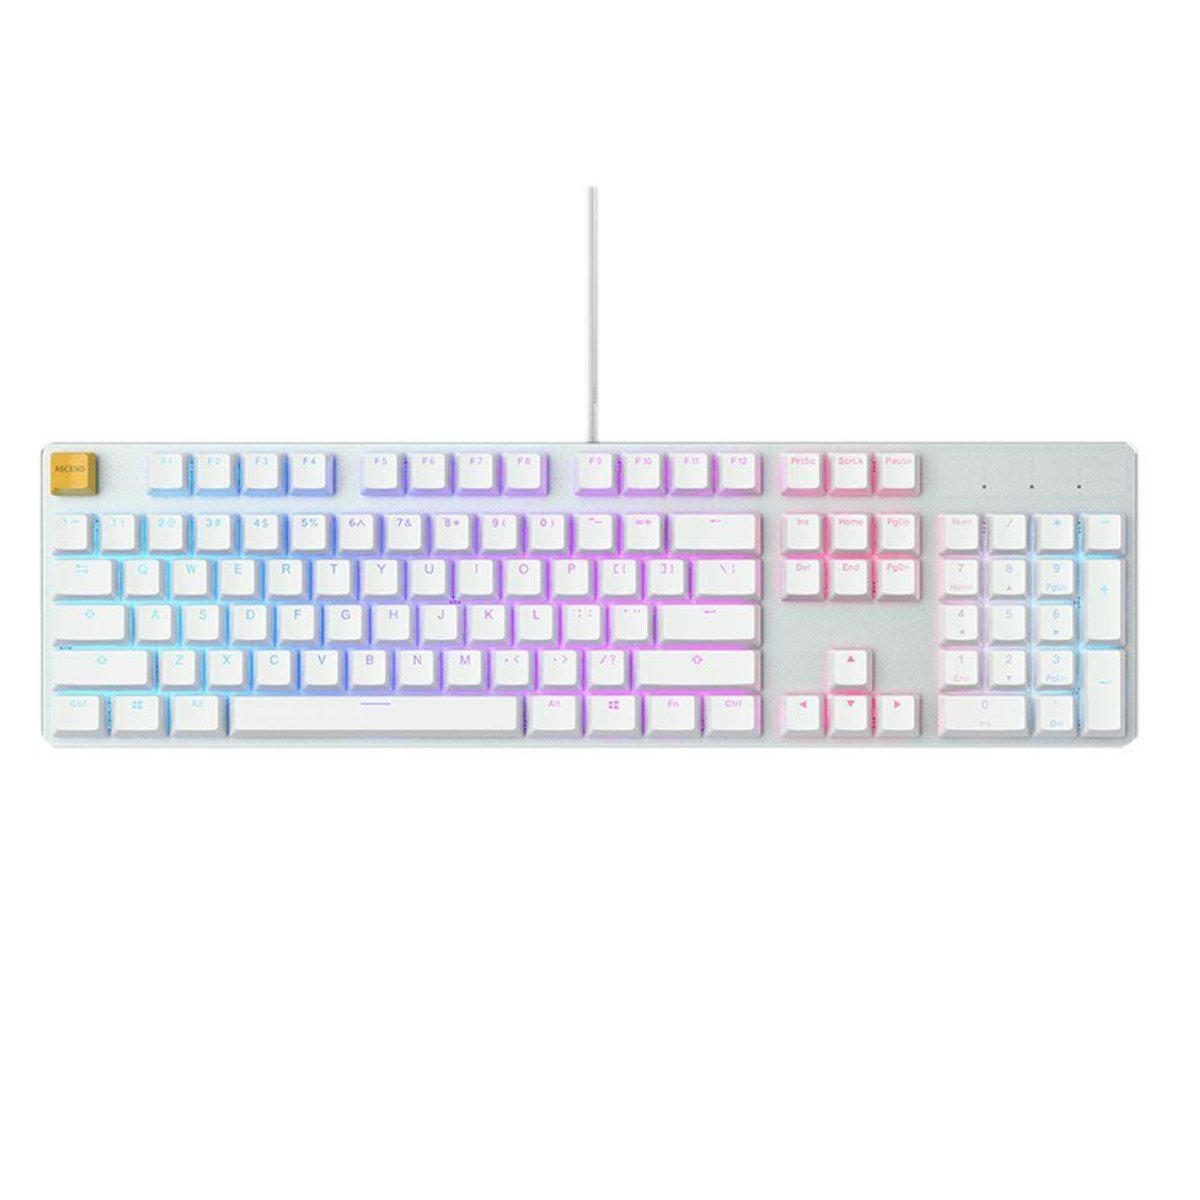 Glorious GMMK RGB Mechanical Keyboard Gateron Brown - White Ice - Store 974 | ستور ٩٧٤